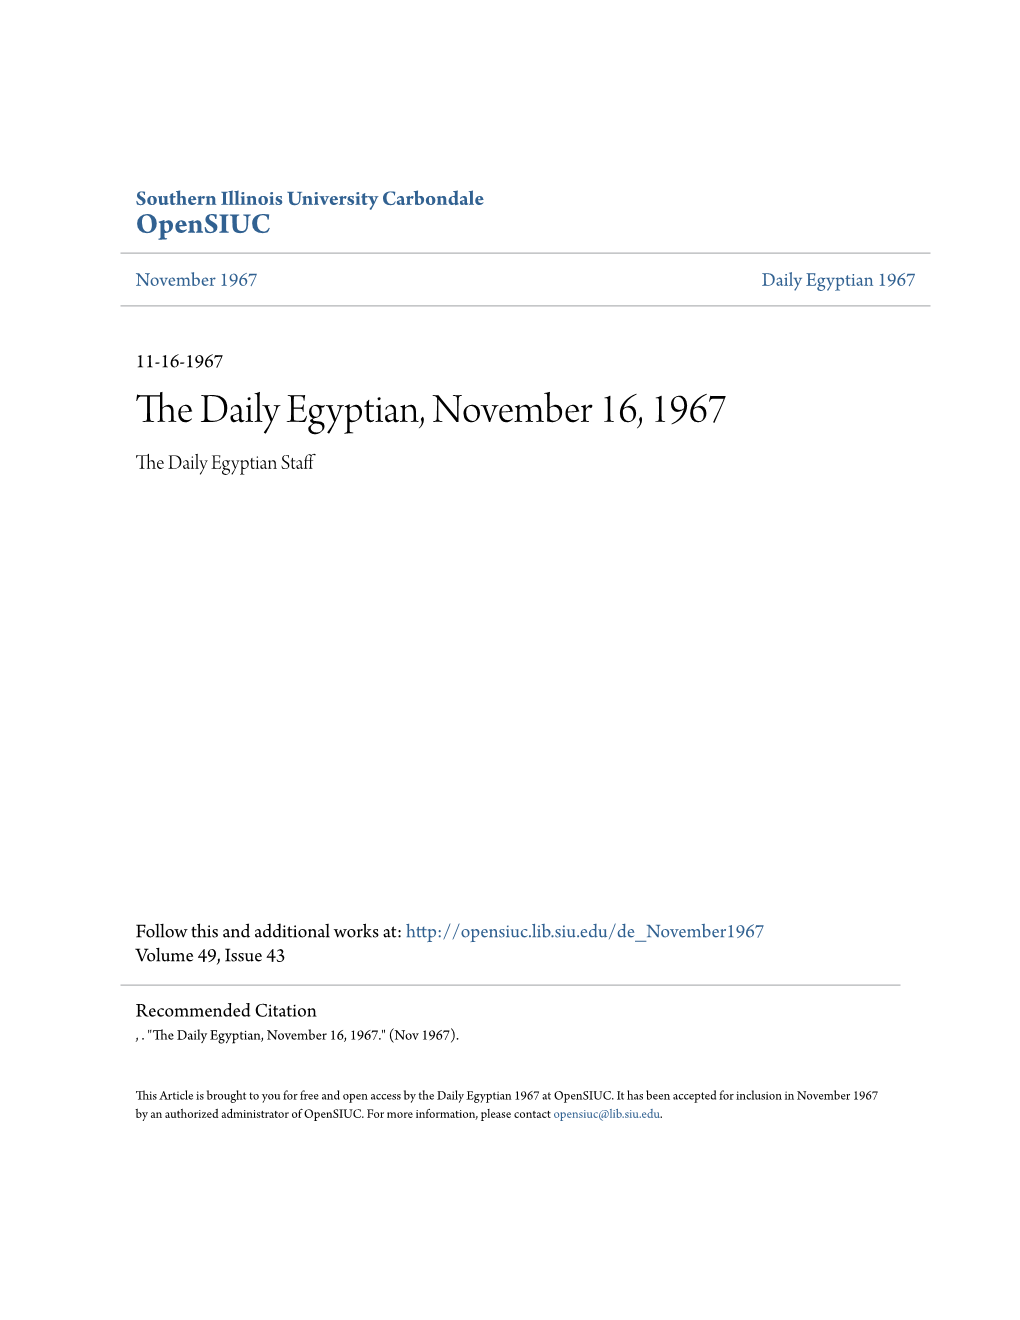 The Daily Egyptian, November 16, 1967